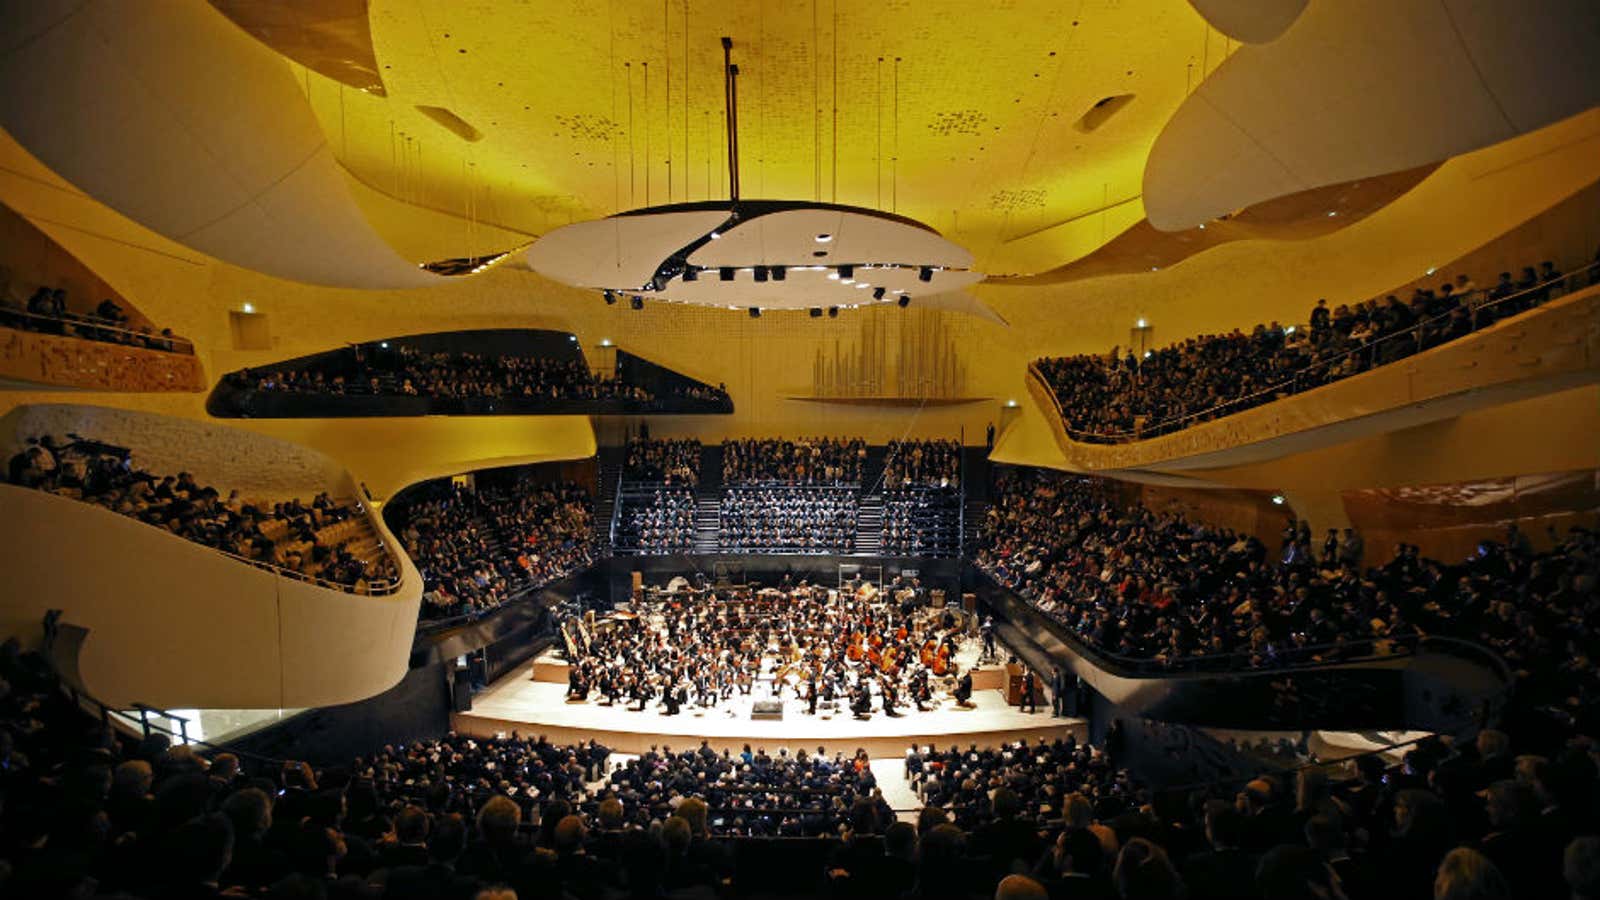 The hall’s innovative design provides unbelievable acoustics.